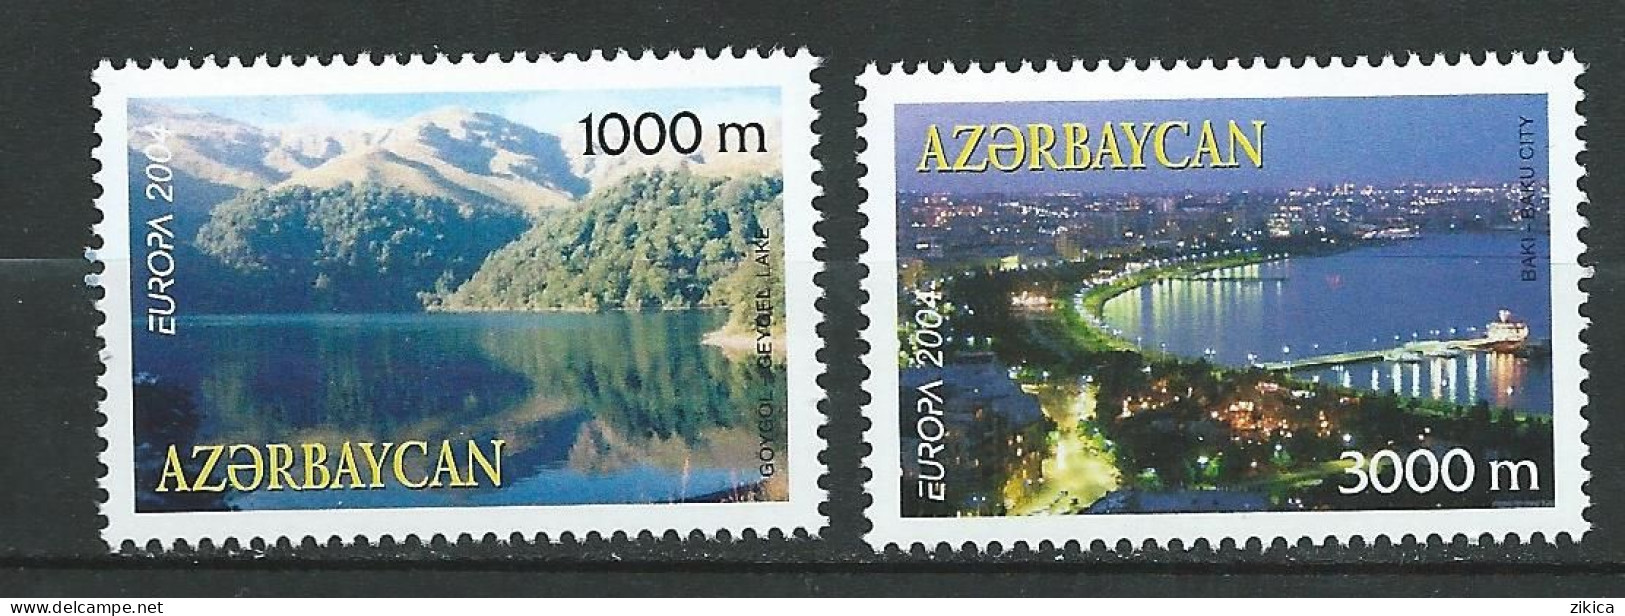 Azerbaijan - 2004 EUROPA Stamps - Holidays.  MNH** - Aserbaidschan